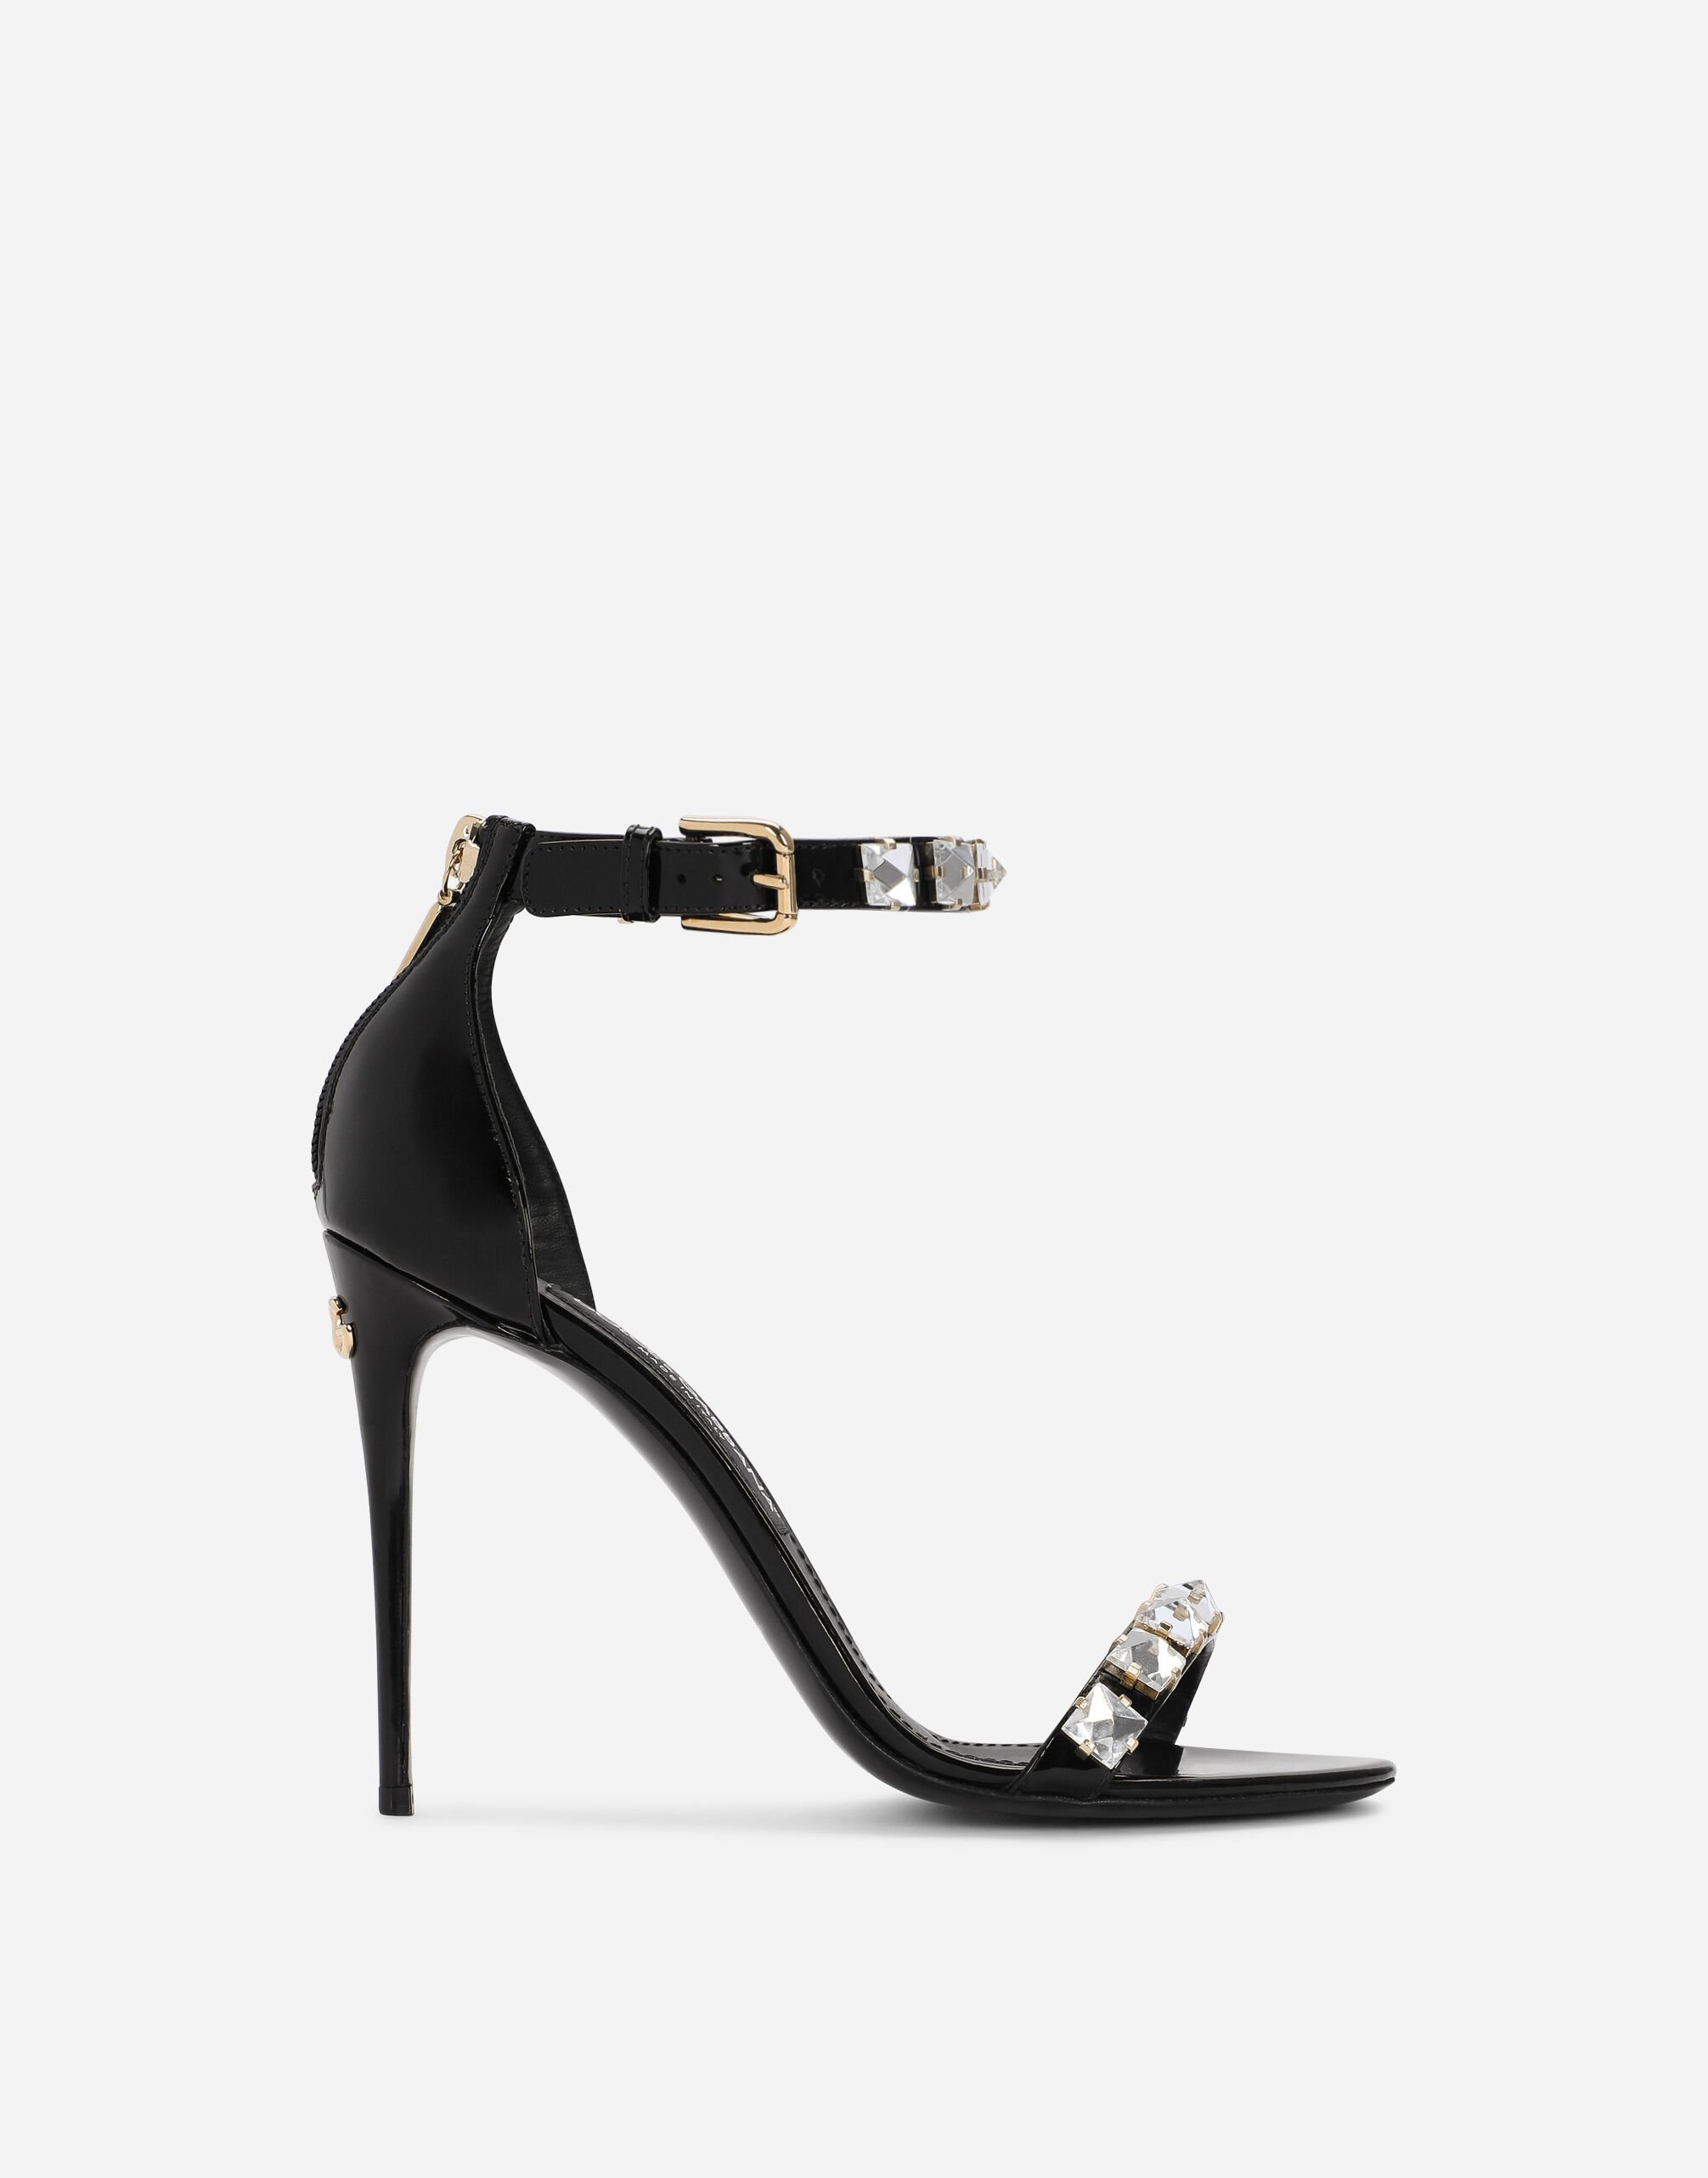 Dolce & Gabbana Sandalia en piel de becerro brillante con strass Negro CR1725A7630